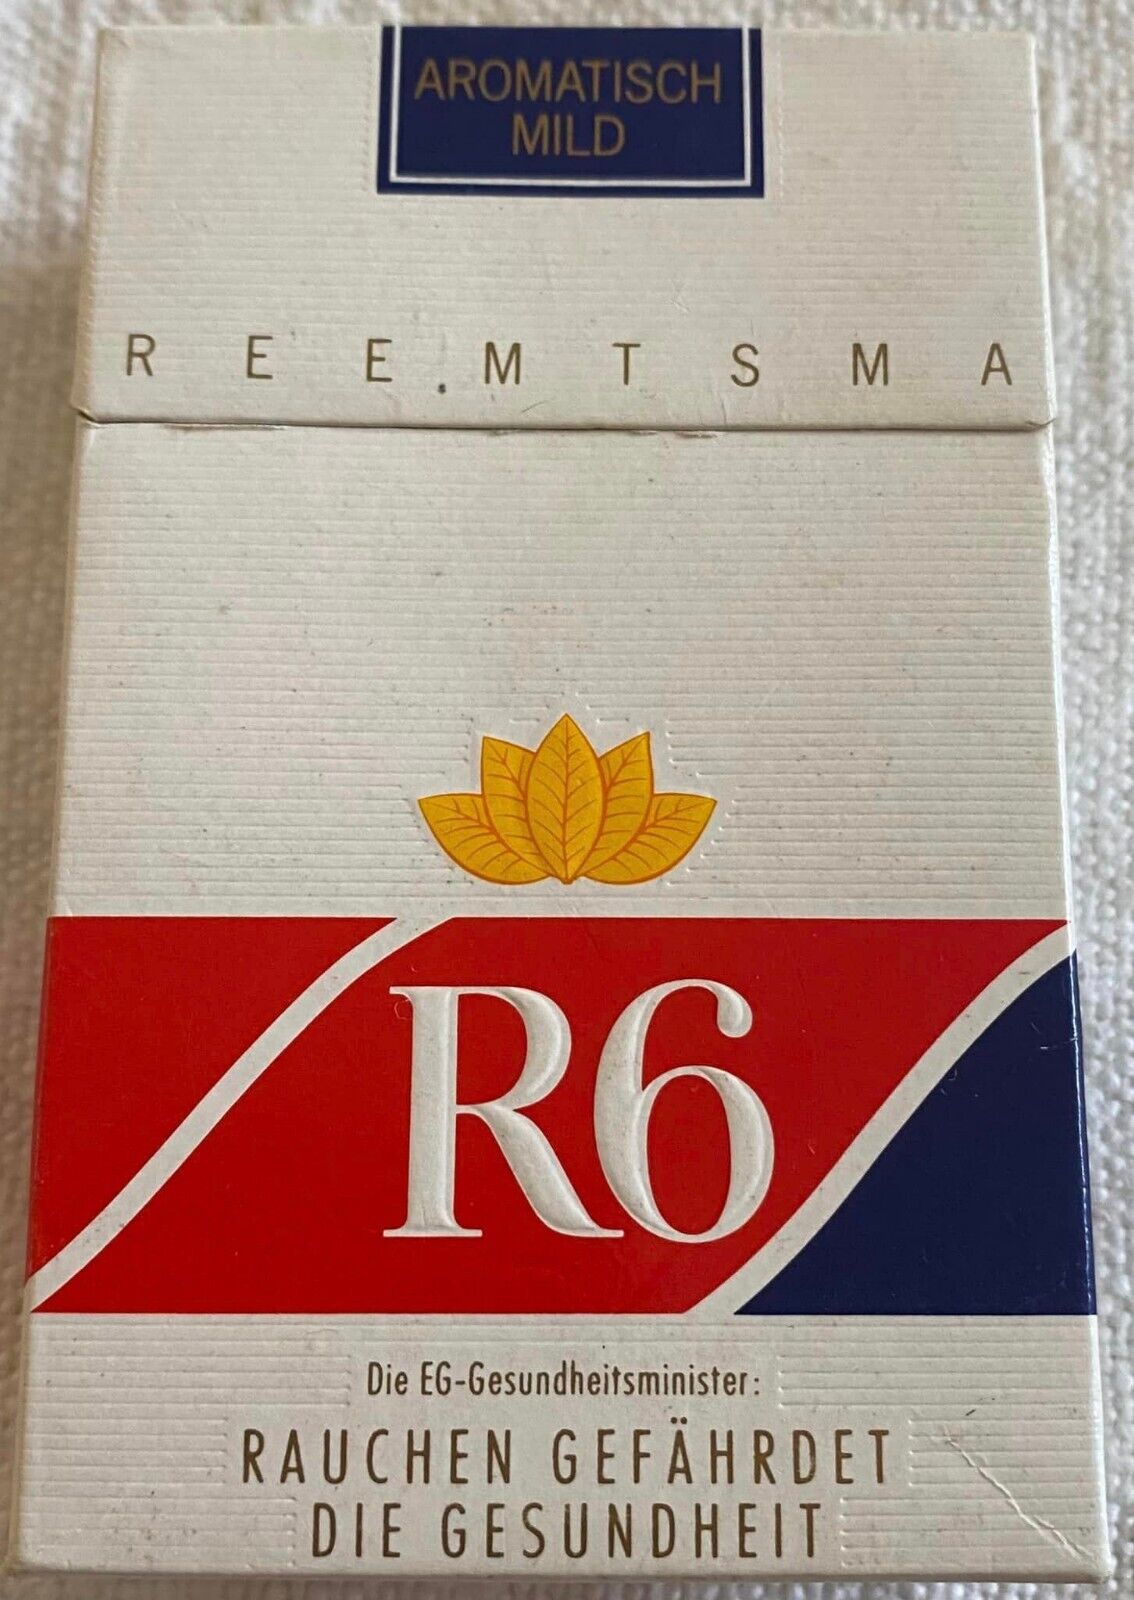 Vintage R6 Filter Cigarette Cigarettes Cigarette Paper Box Empty Cigarette Pack